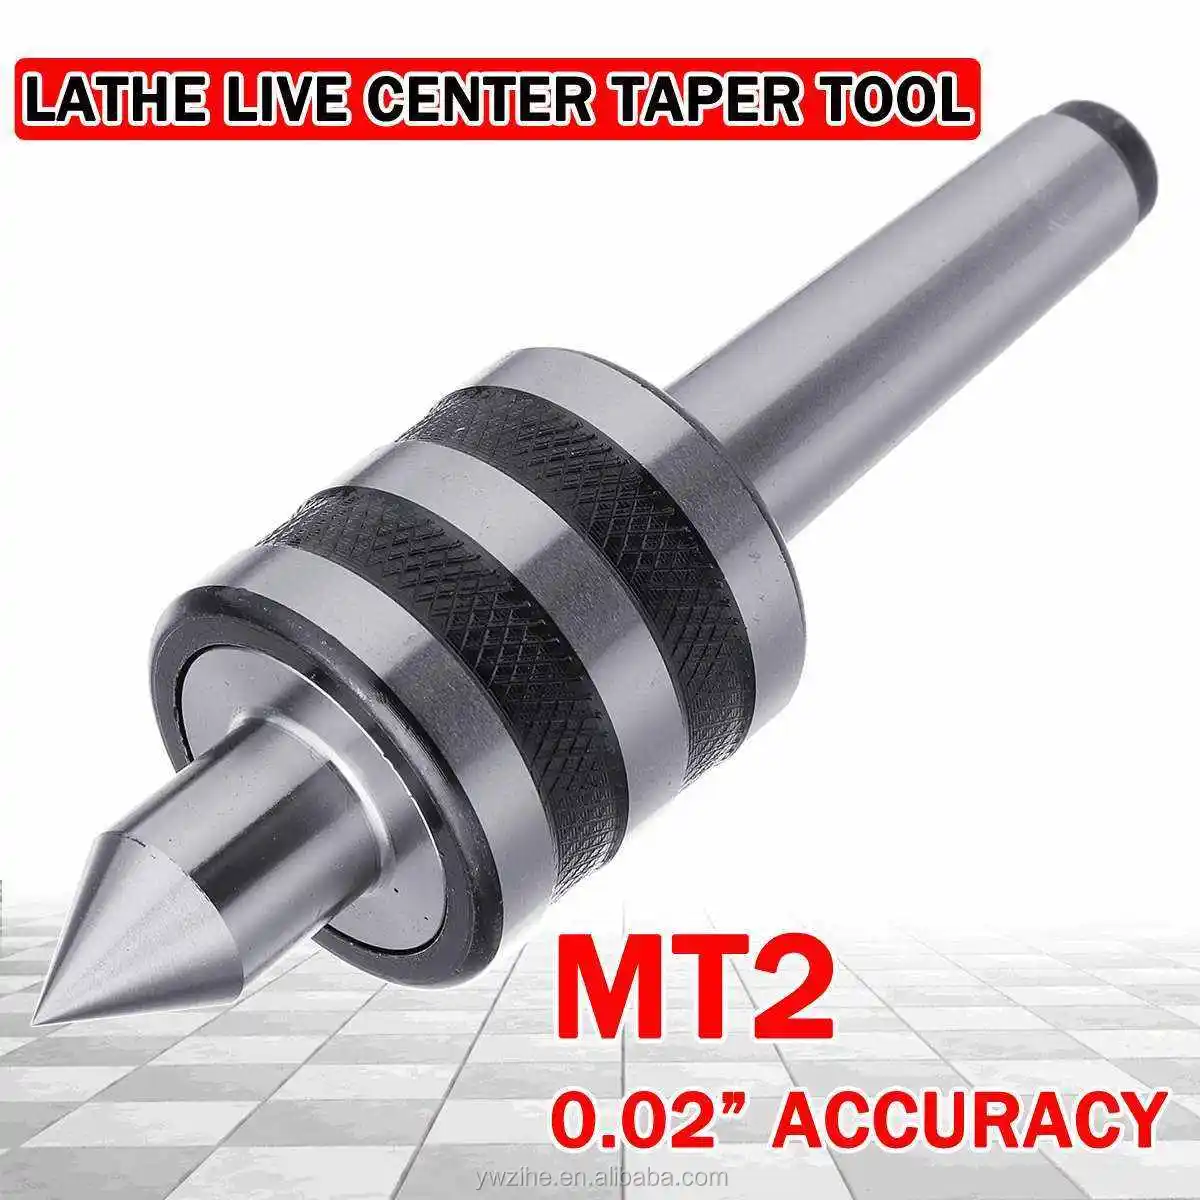 MT2 Live Center Torno de Metal Precisión Rotativa en Vivo Centro de Fresado Taper Metal Work Tool CNC Torno